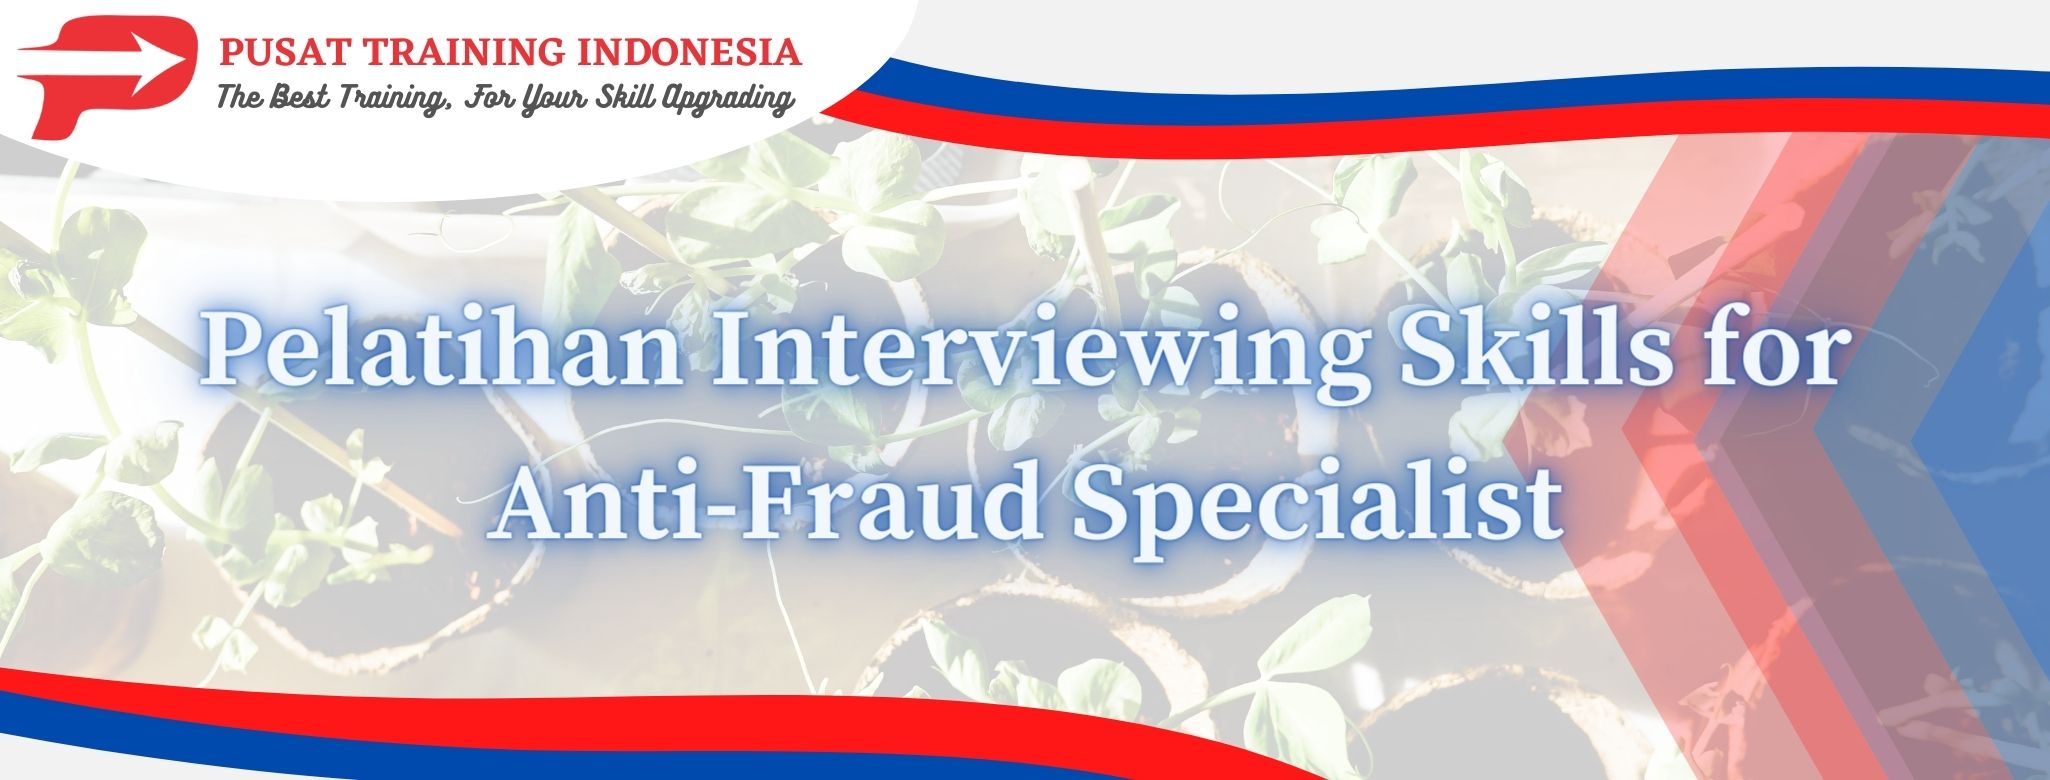 Pelatihan-Interviewing-Skills-for-Anti-Fraud-Specialist